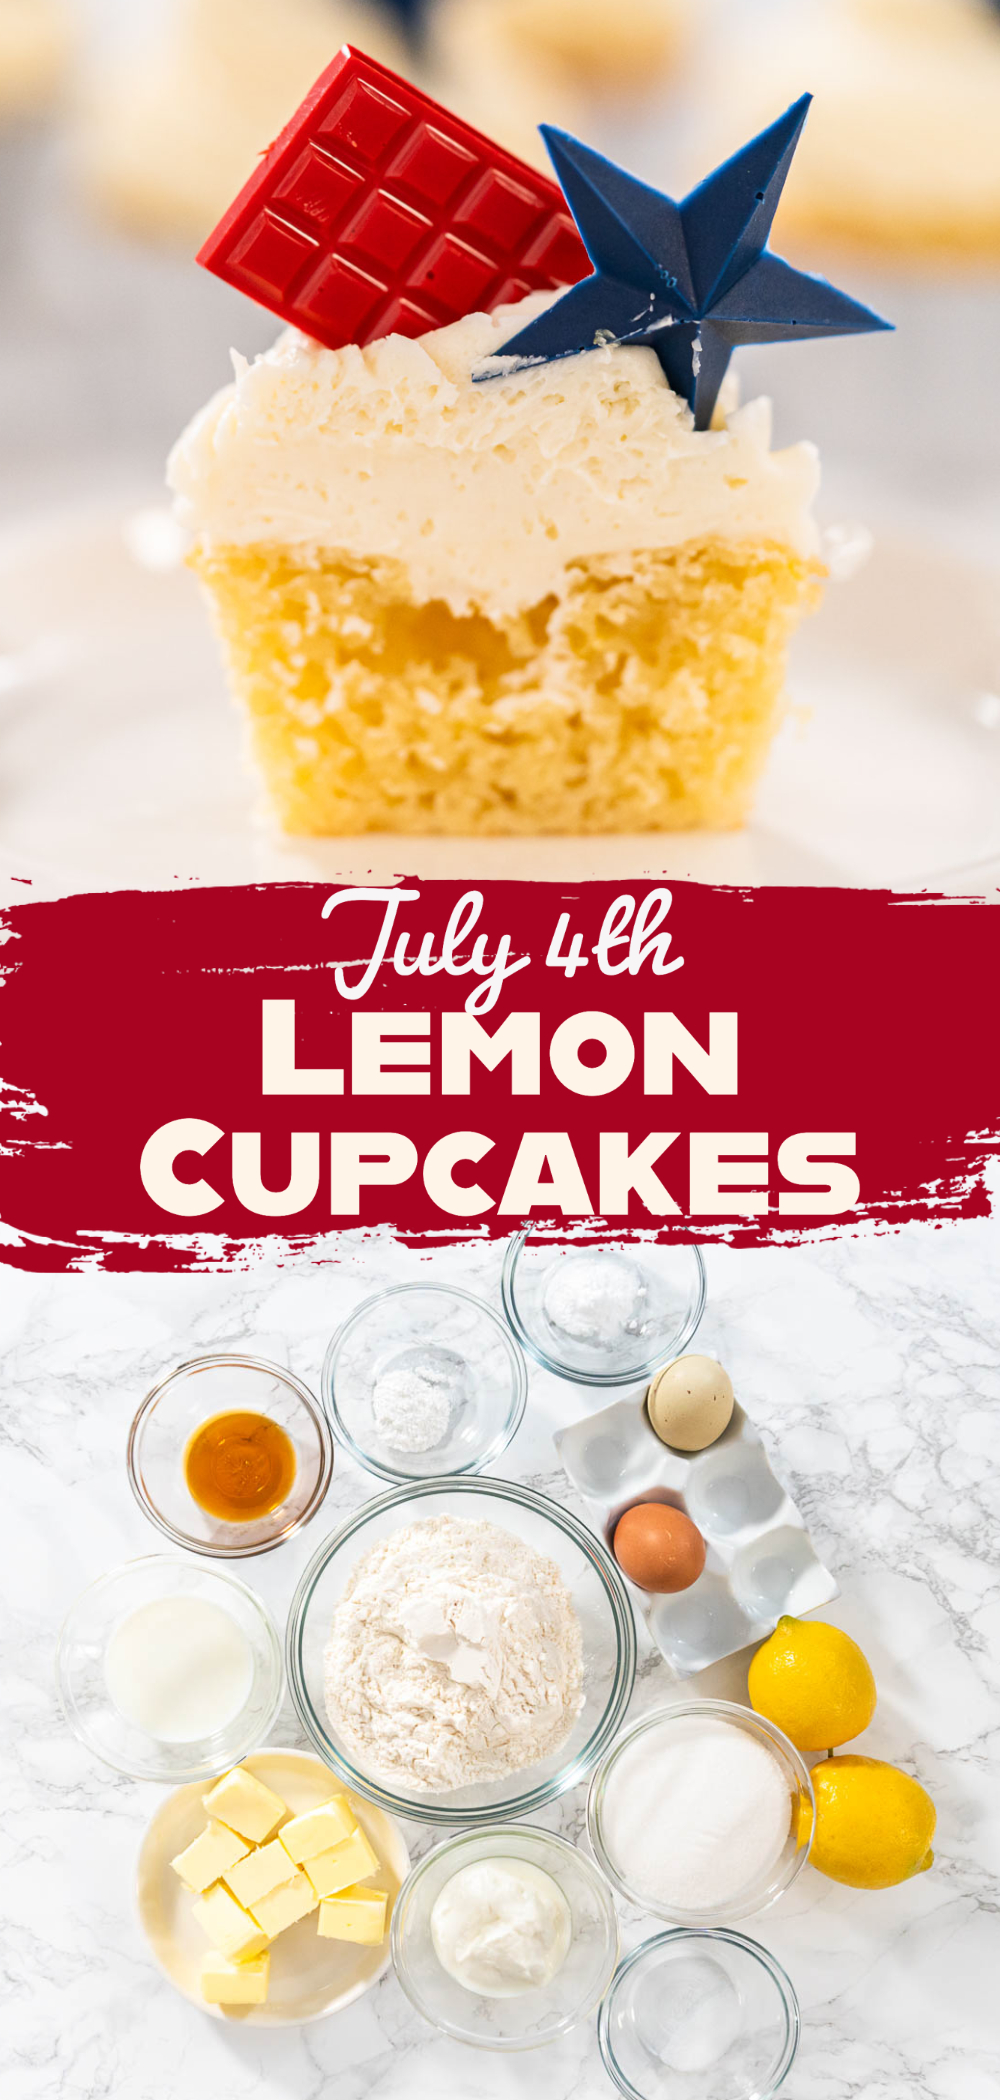 July 4th Lemon Cupcakes